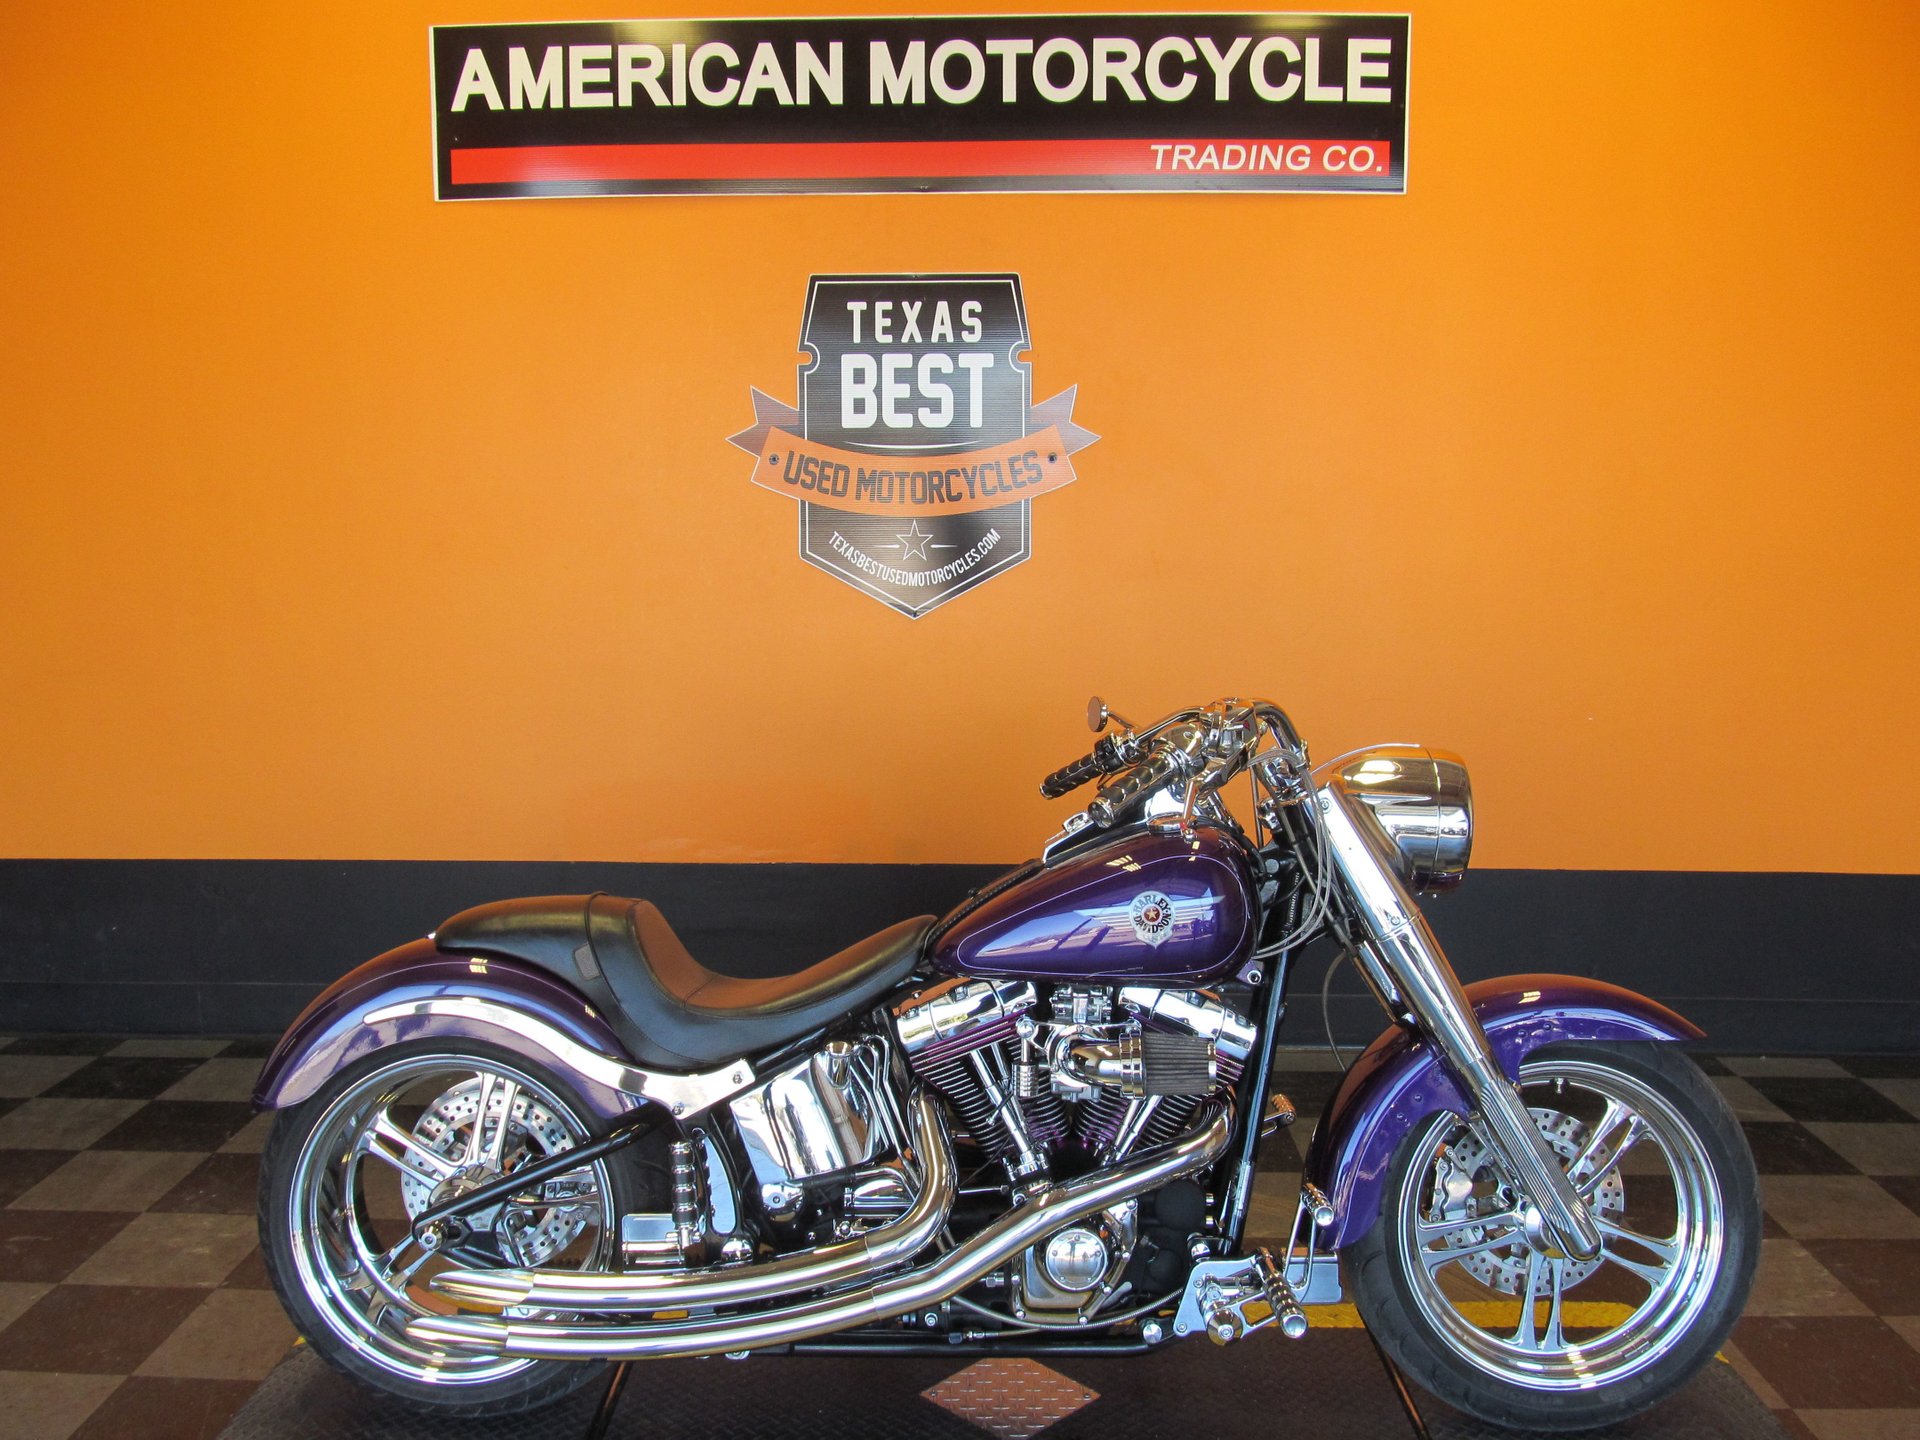 2001 Harley Davidson Softail Fat Boy American Motorcycle Trading Company Used Harley Davidson Motorcycles